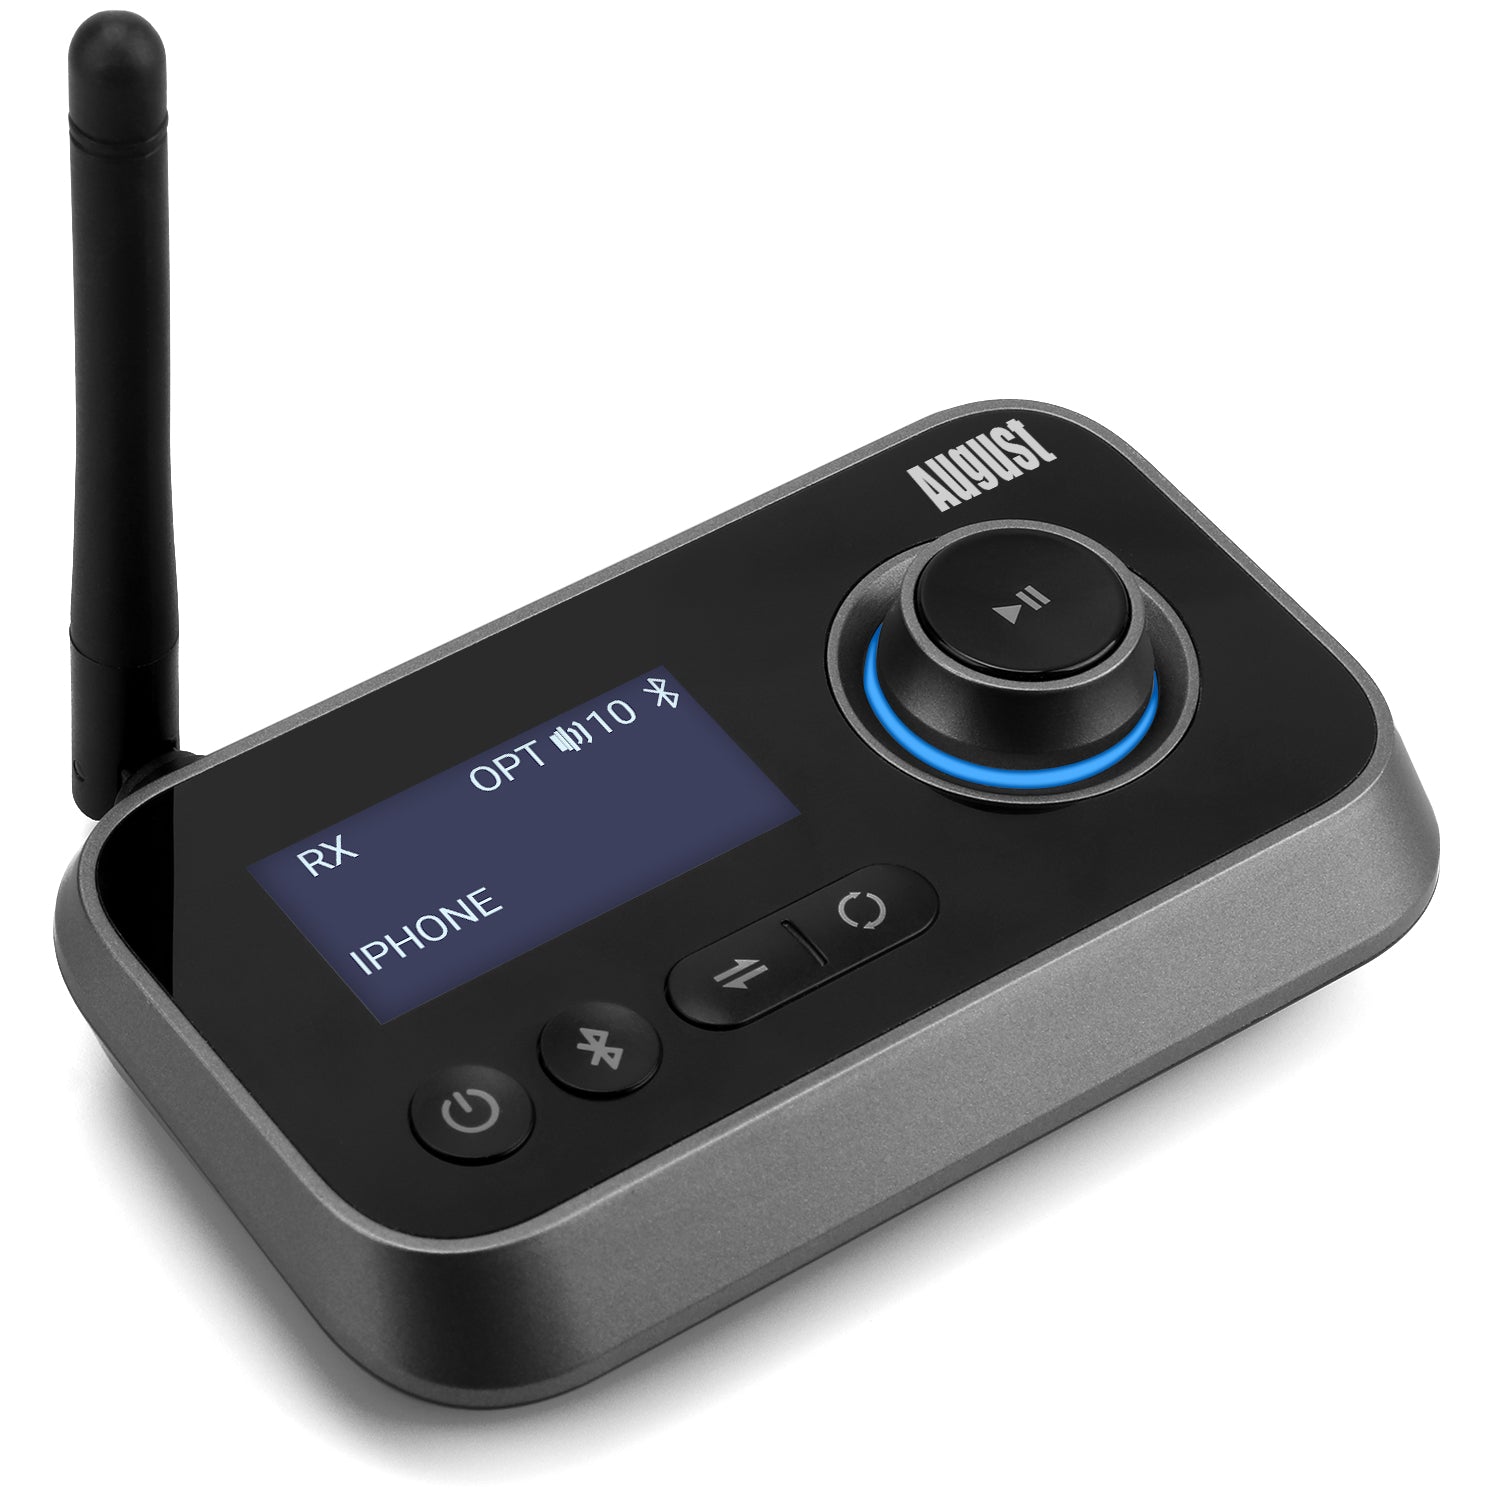 Bluetooth Optical Audio Receiver / Transmitter, Dual Antenna